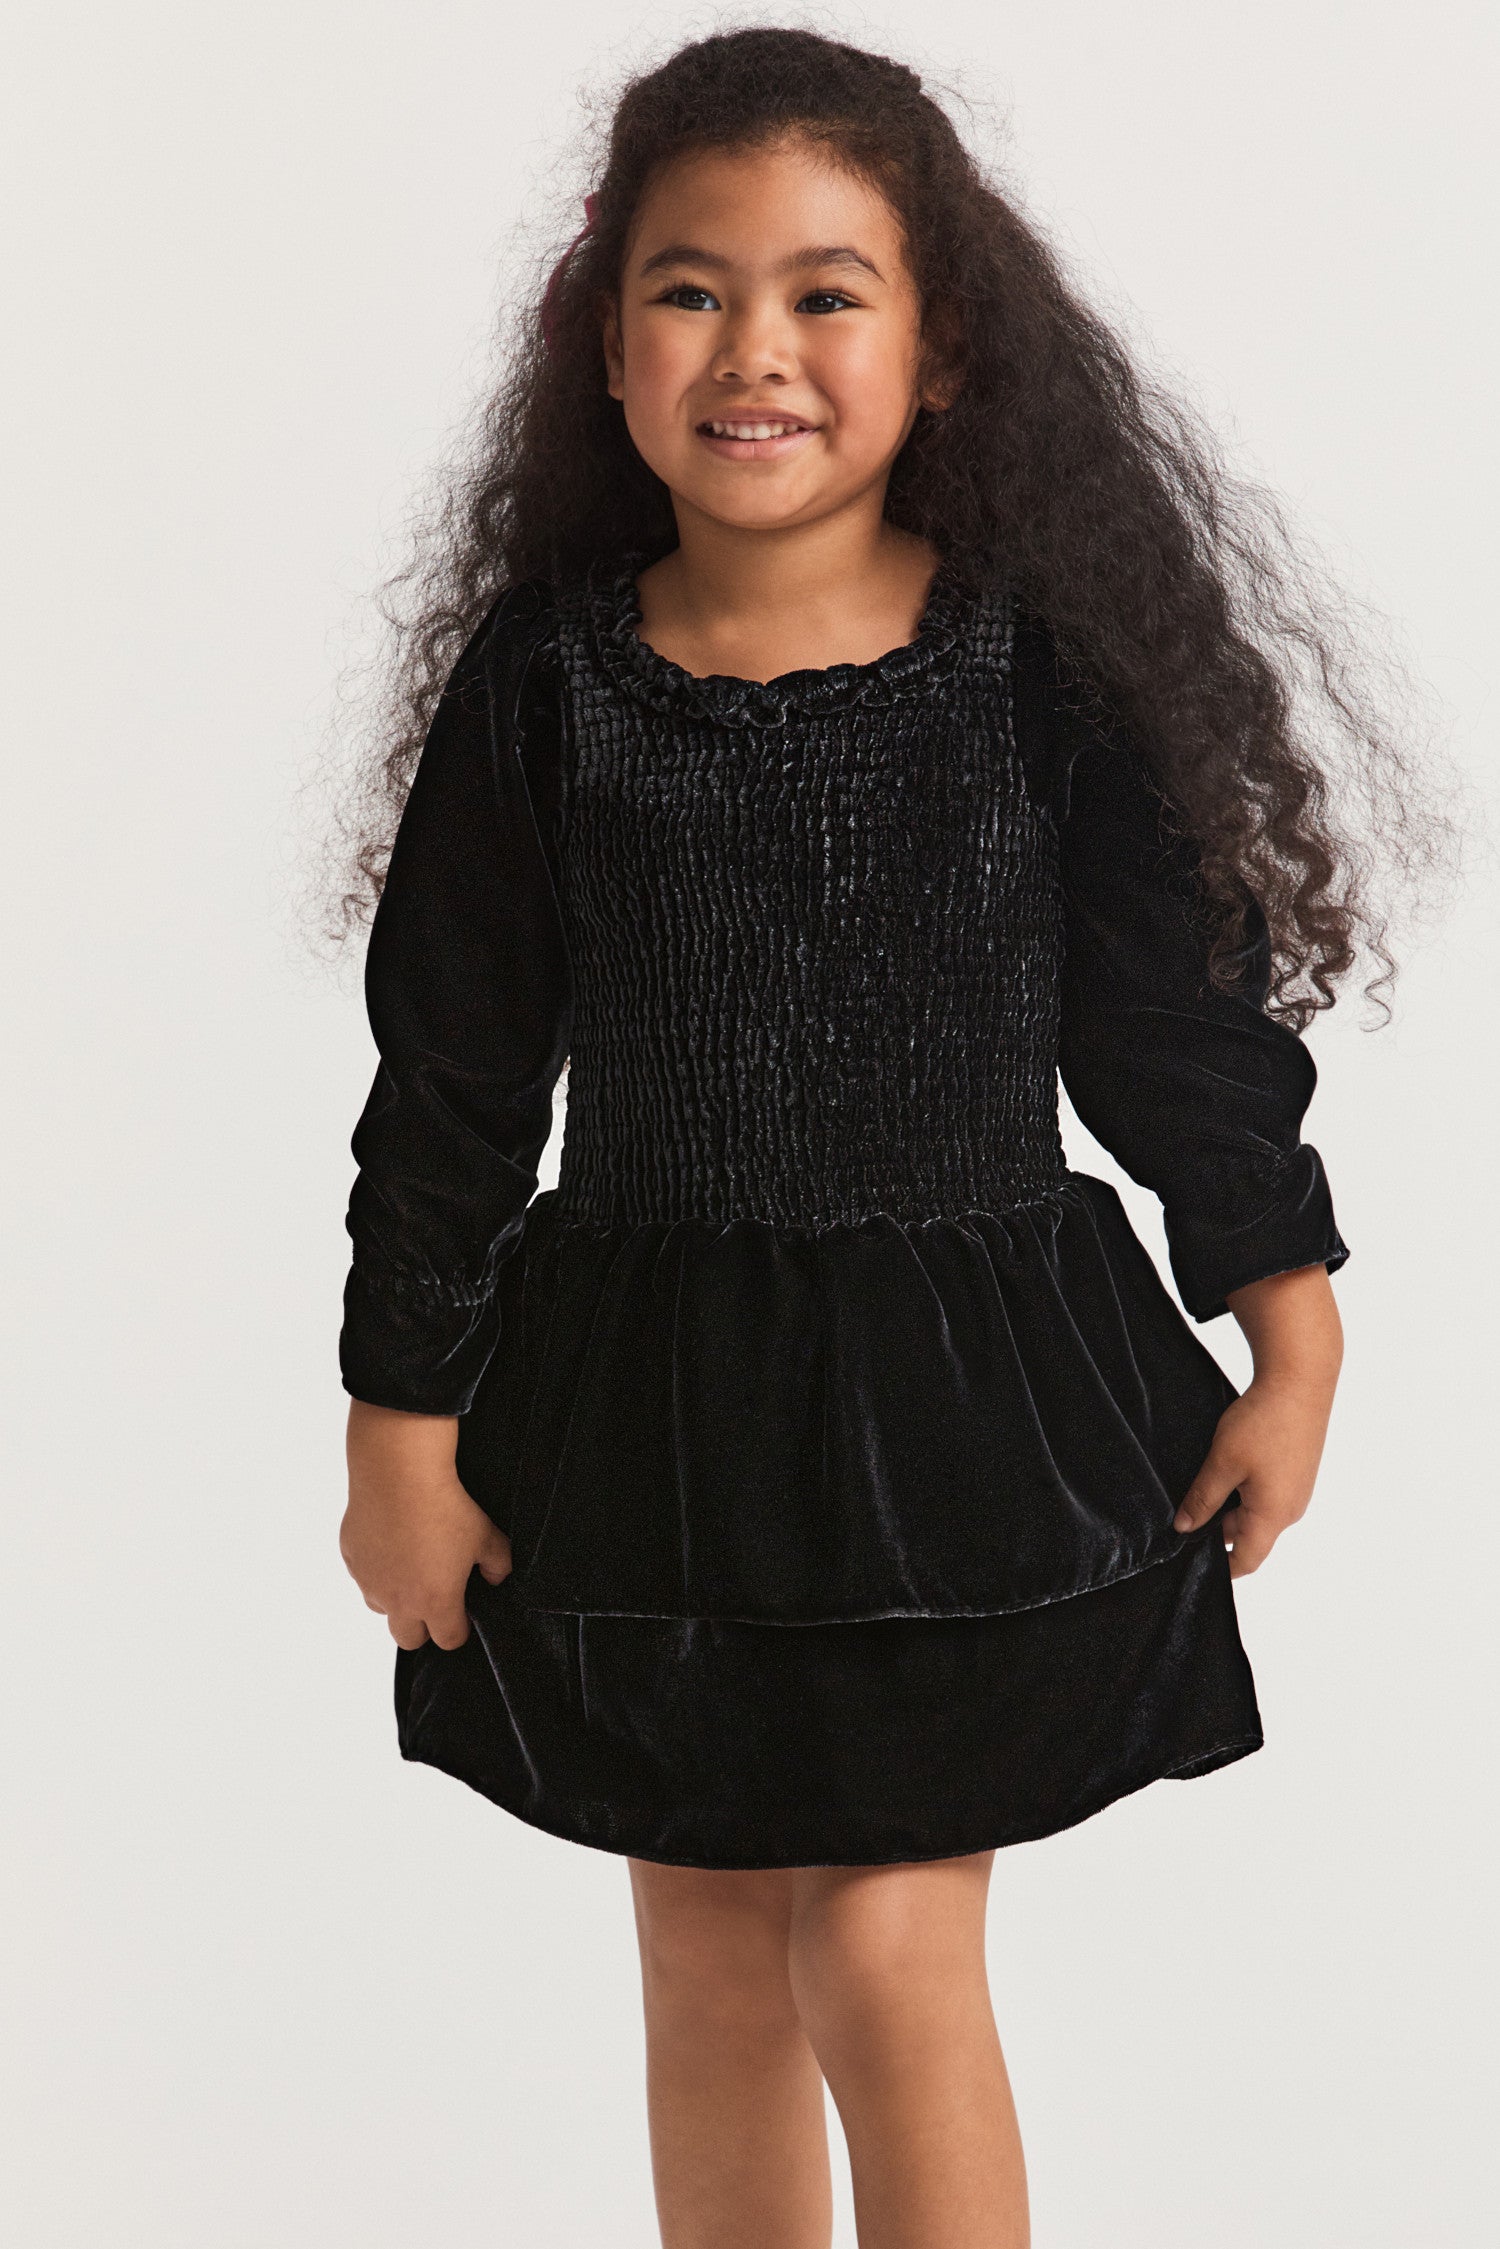 Girls mini black dress, long-sleeves with two layer ruffle skirt. 